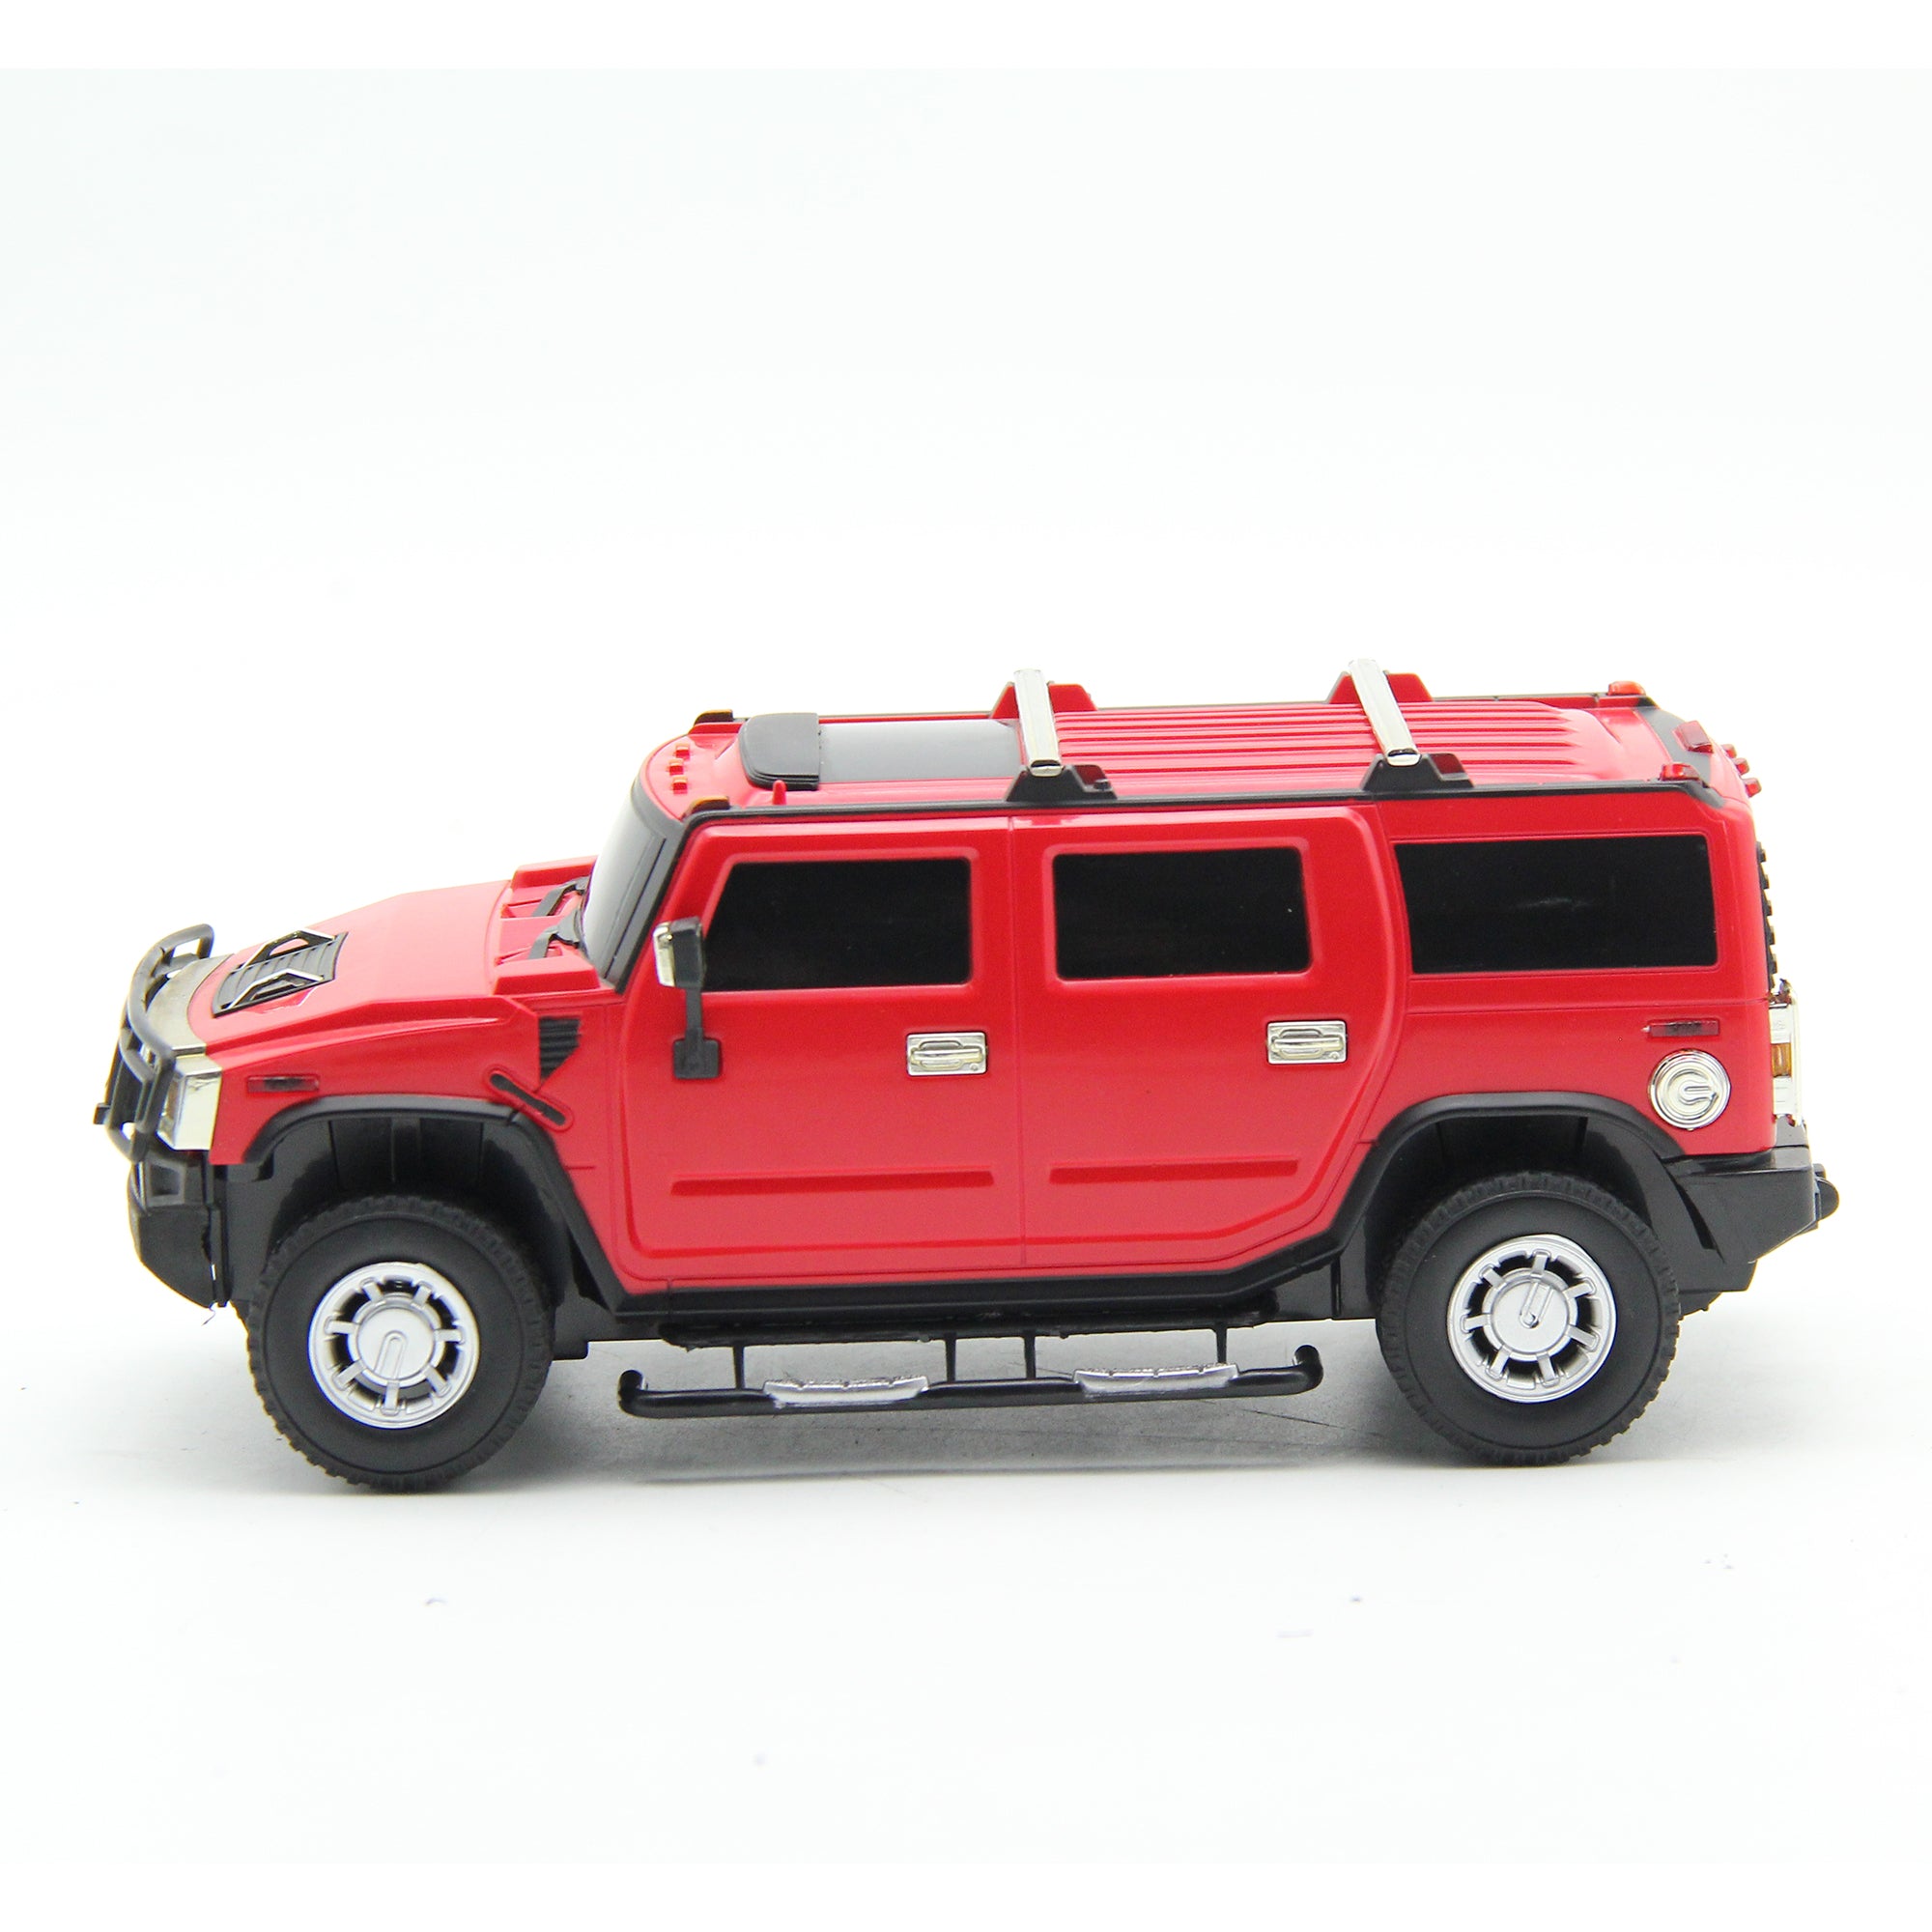 Playzu Remote Control Car Series,Army Vehicle R/C 1:24 - Red,  1:24 Scale